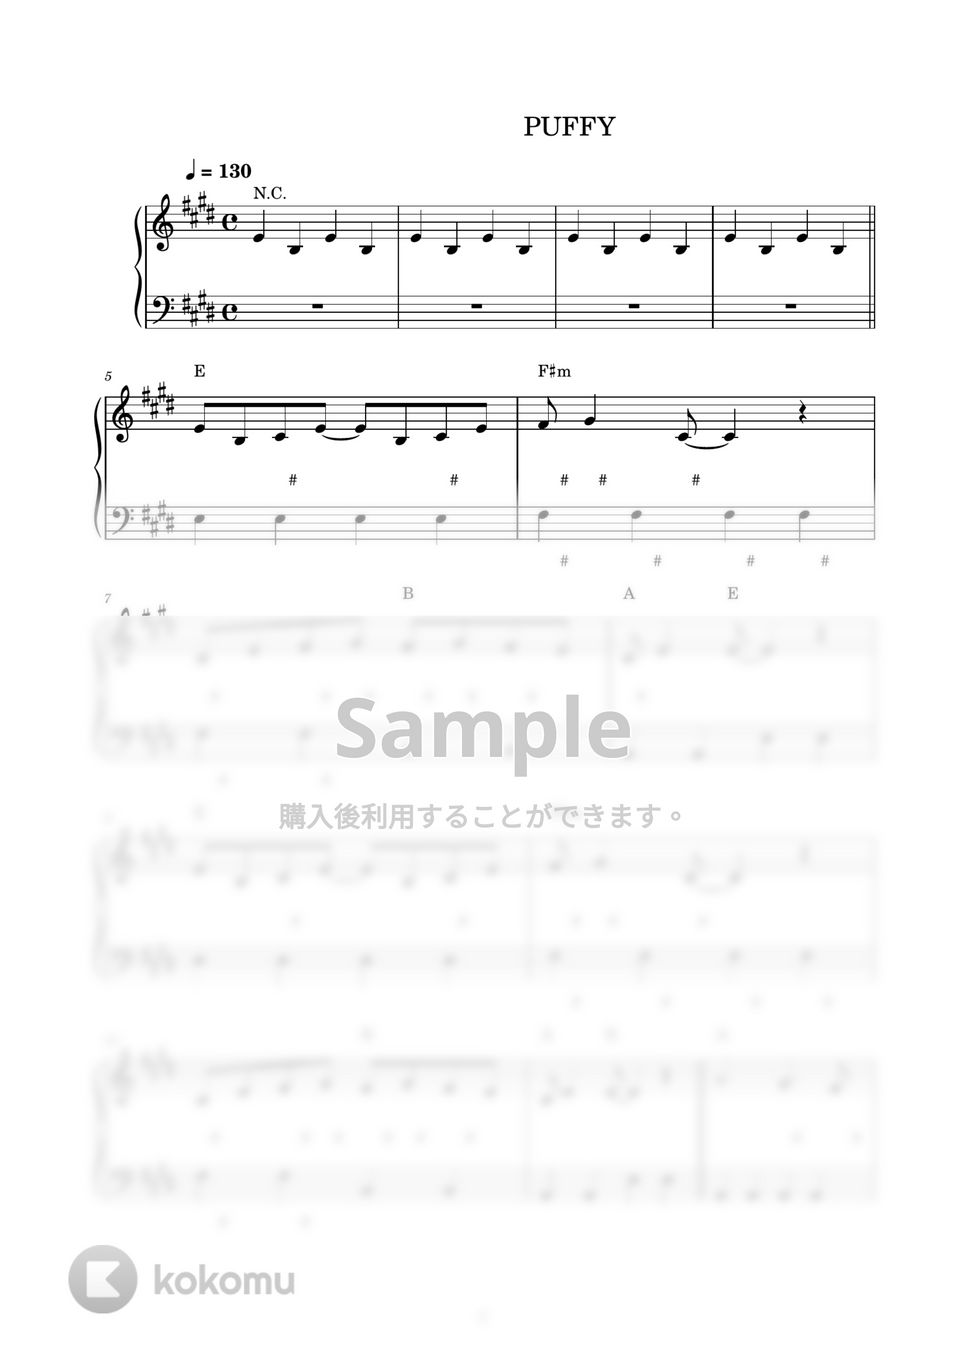 PUFFY - 愛のしるし (ピアノ楽譜 / かんたん両手 / 歌詞付き / ドレミ付き / 初心者向き) by piano.tokyo